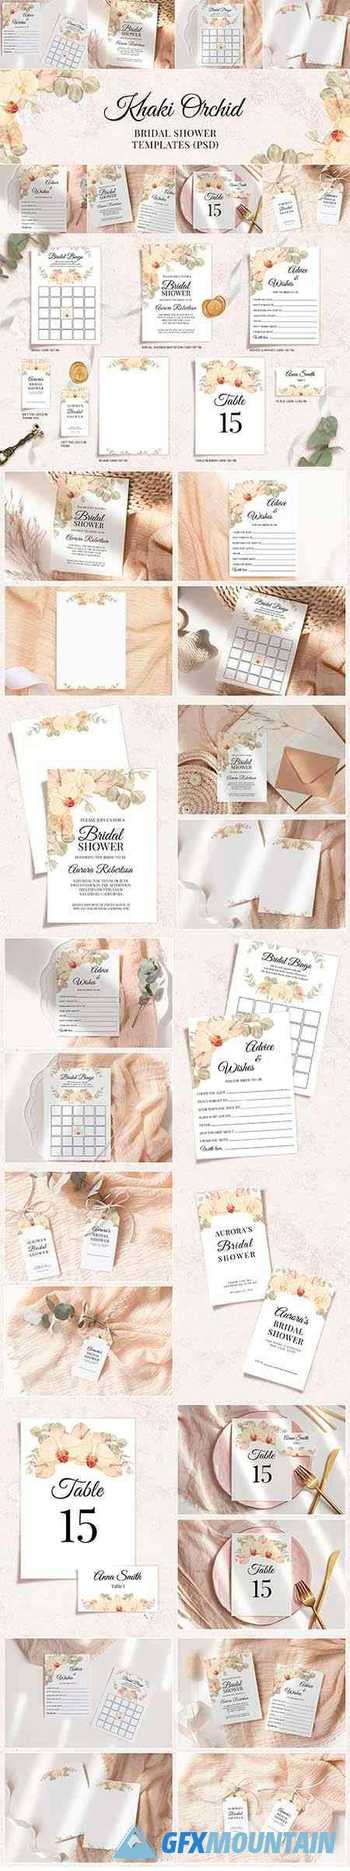 Boho Bridal Shower Templates Cards Floral Invitation Suit